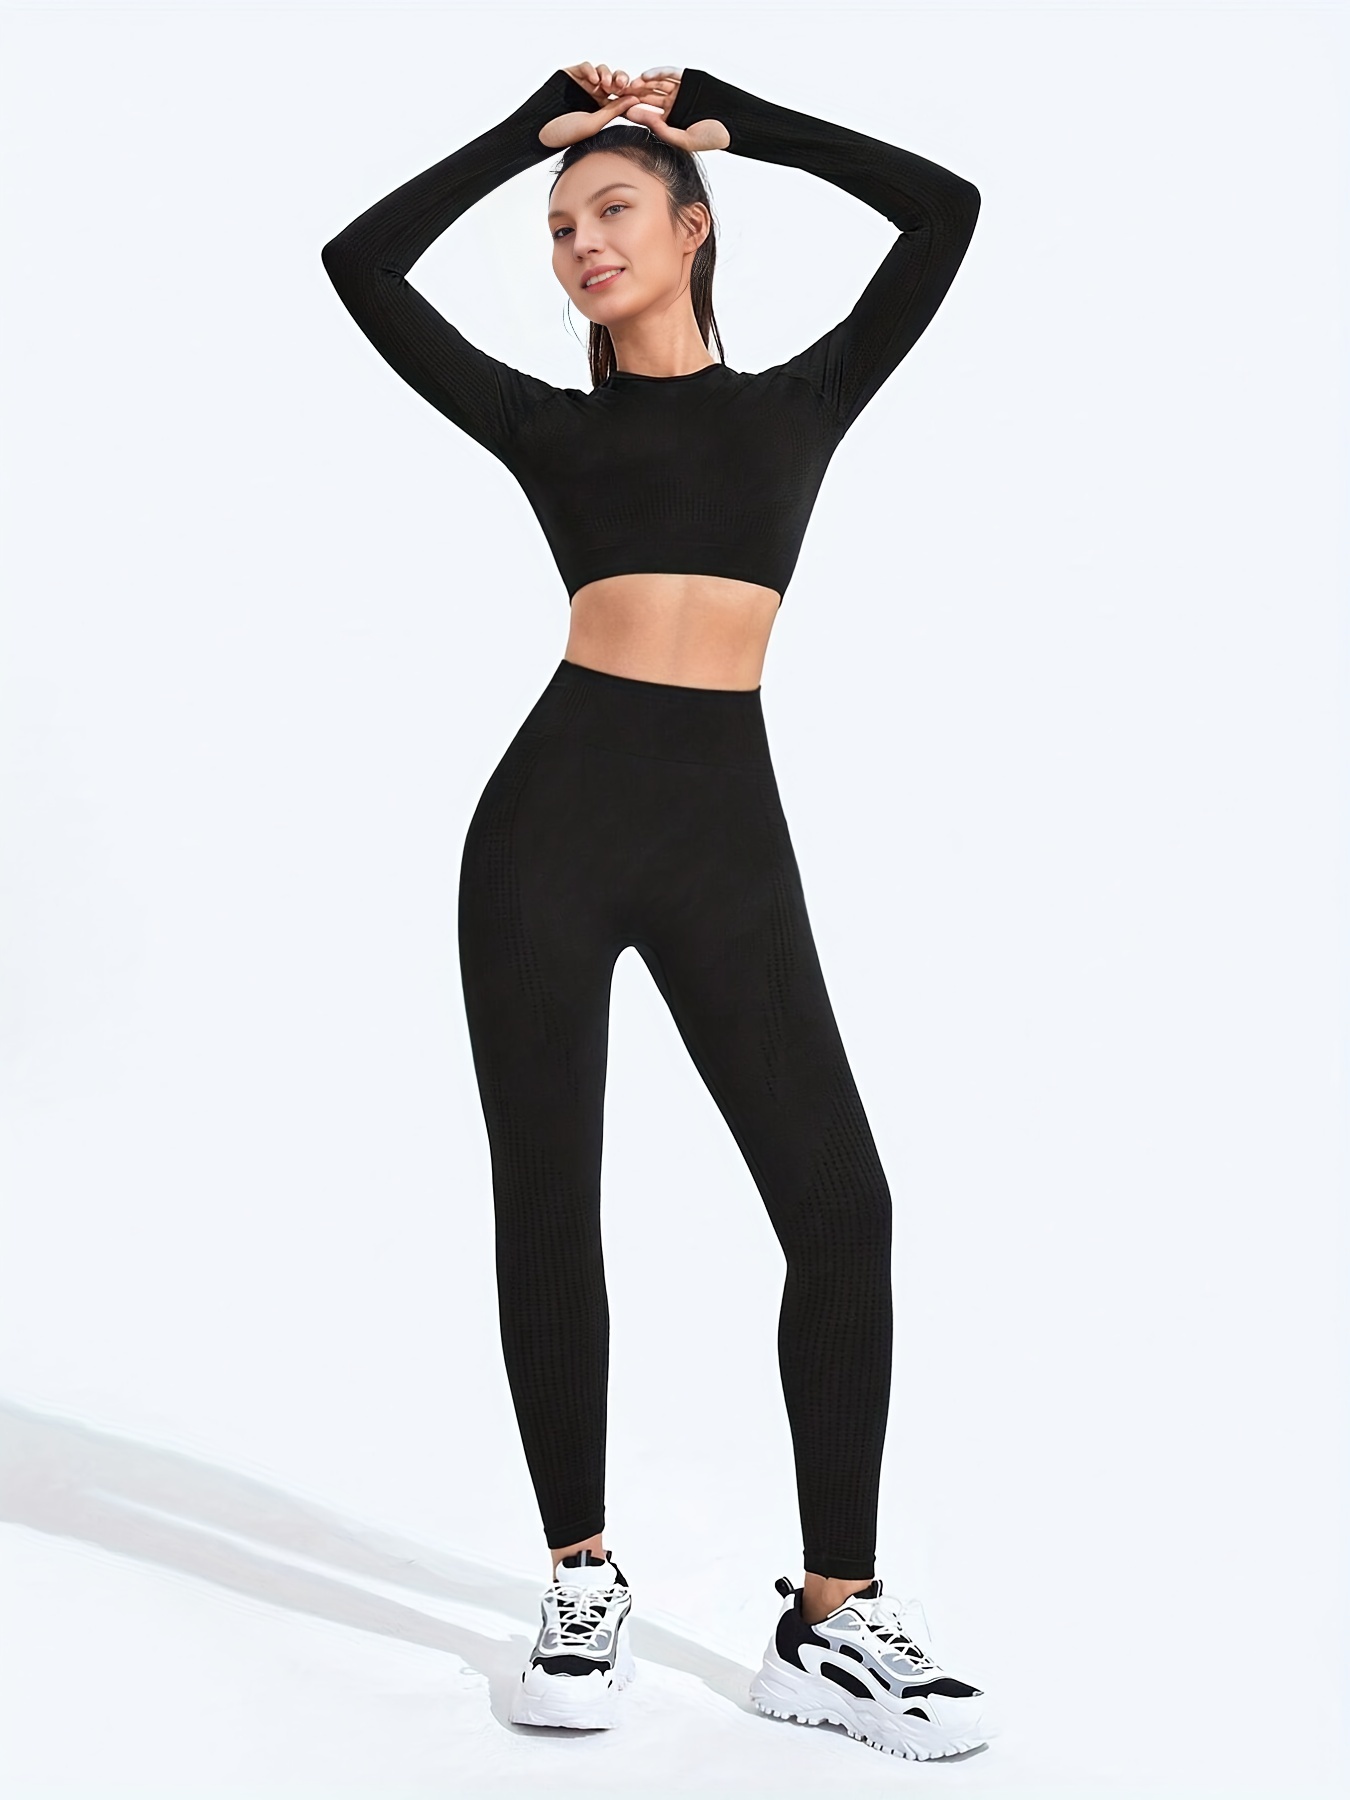 Women Plain Short Sleeve Sports Fitness Yoga 2pcs Set Crop Tops + Shorts